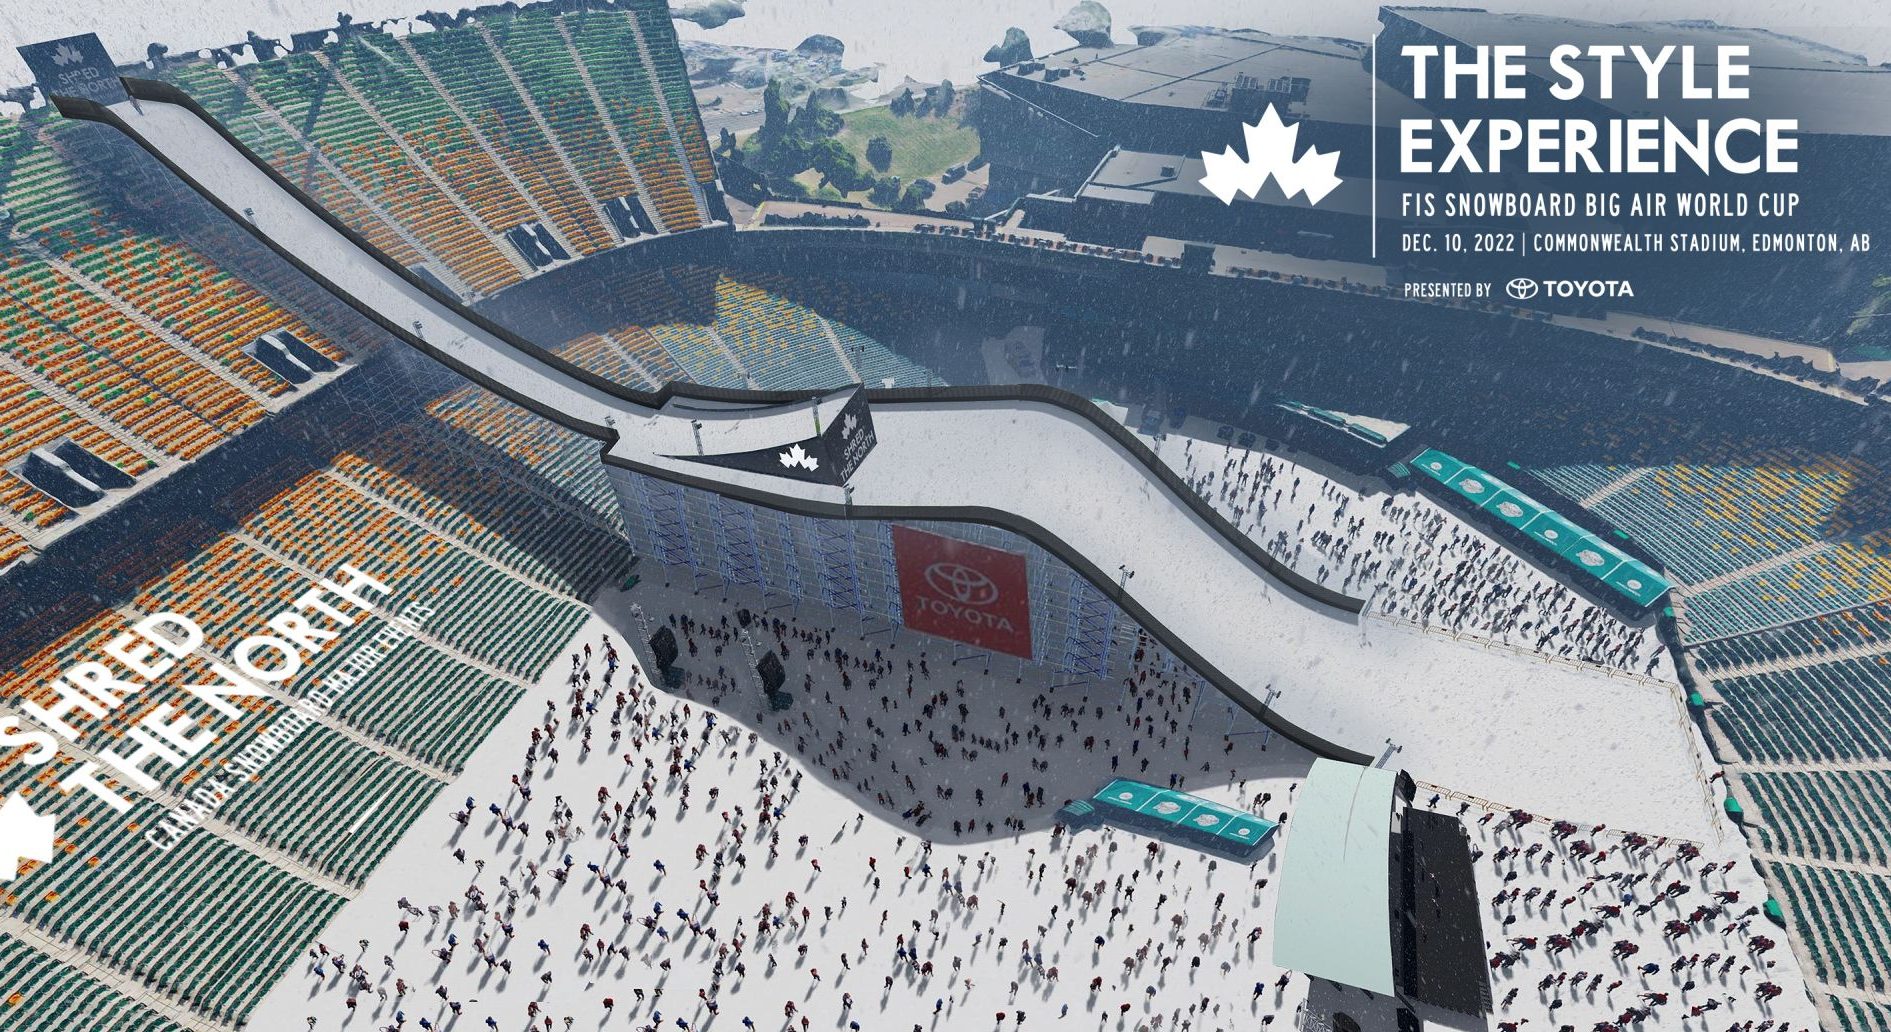 Massive Snowboarding Jump Built At Canadian Stadium For Big Air Event